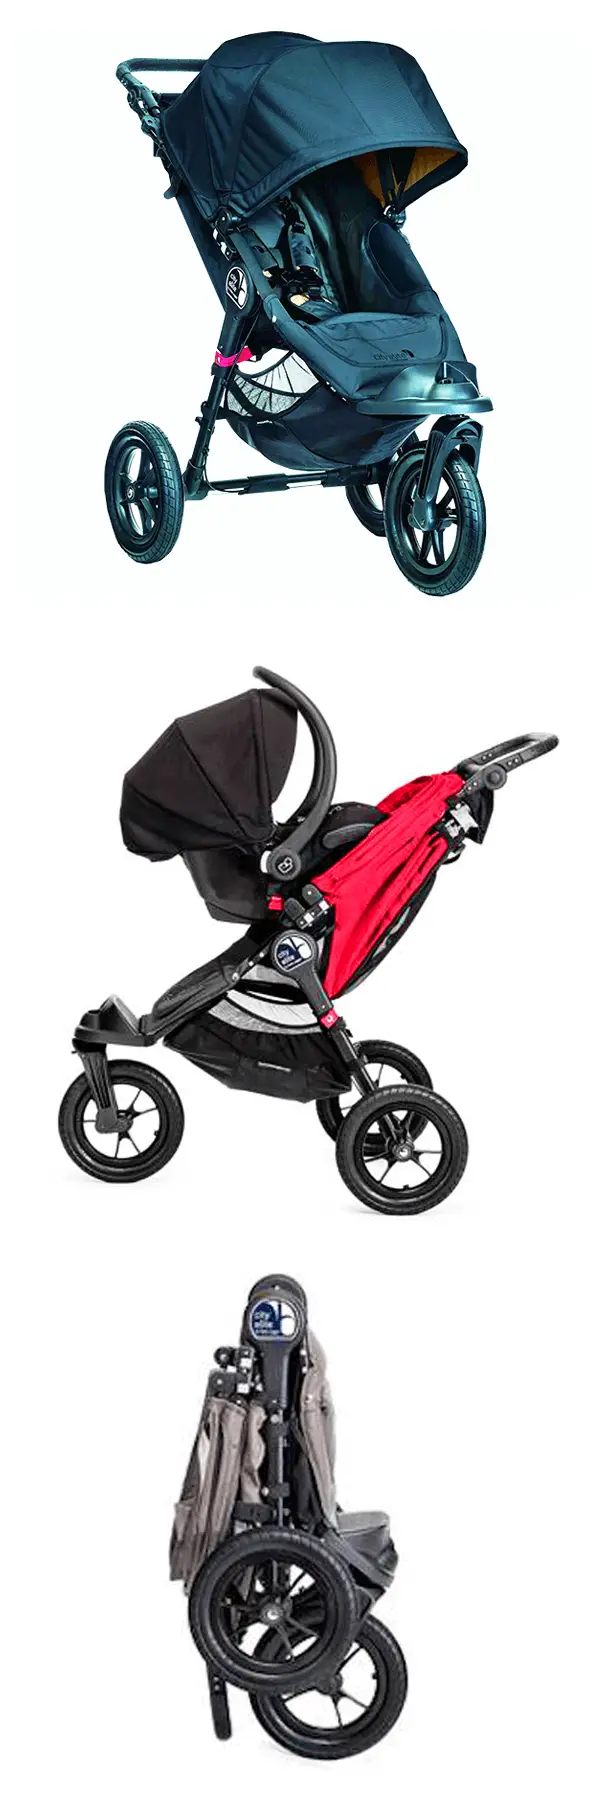 Baby Jogger City Elite stroller configurations